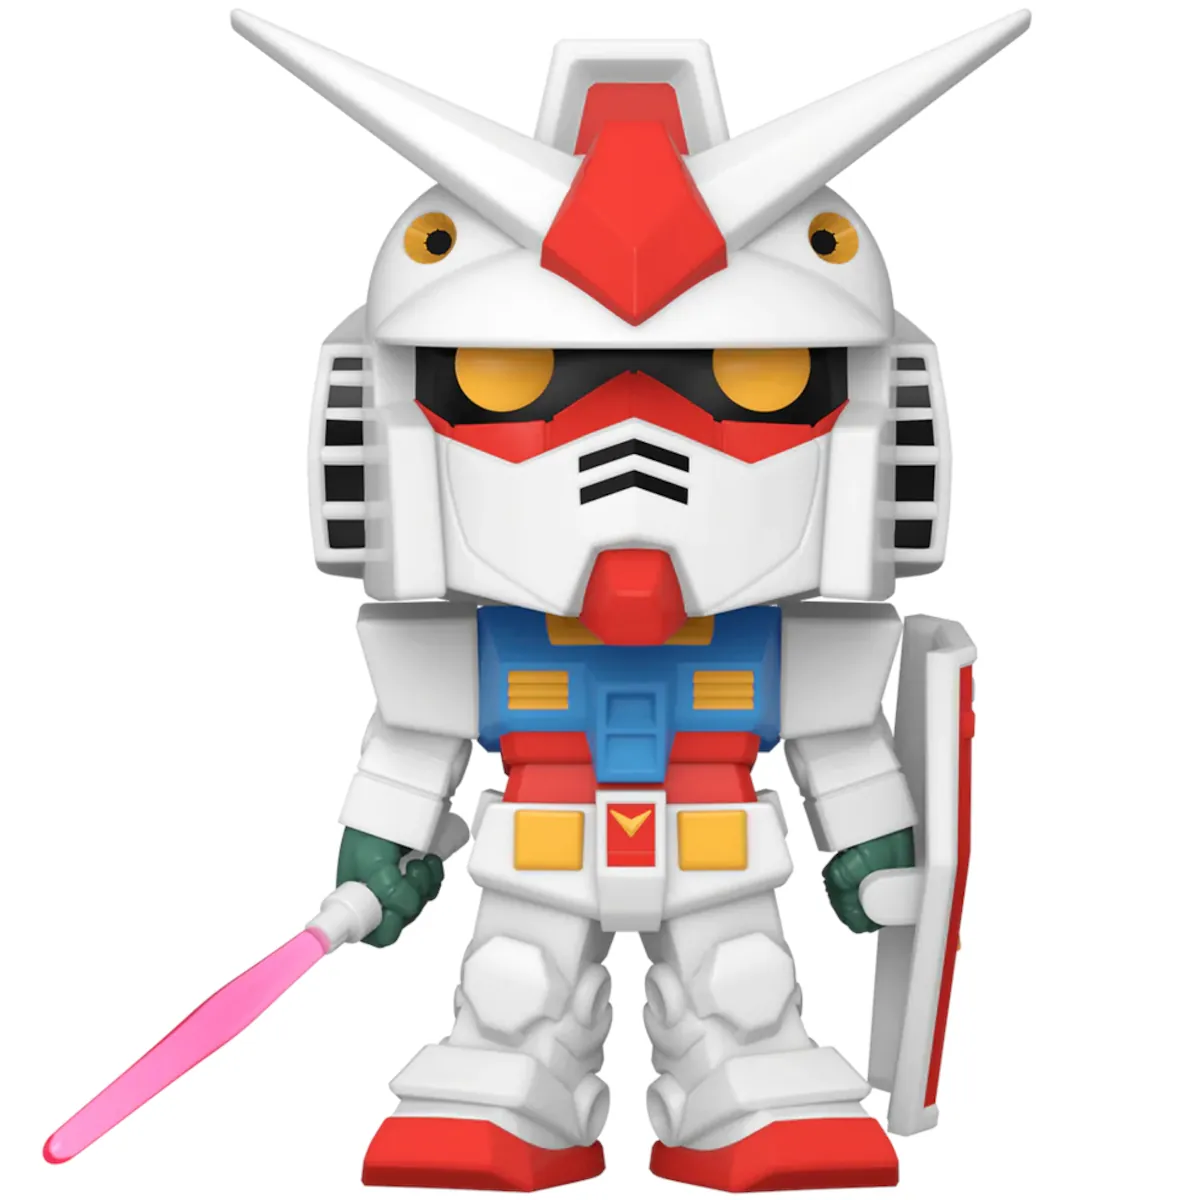 82983 Funko Pop! Animation - Mobile Suit Gundam - RX-78-2 Gundam Super Sized Collectable Vinyl Figure